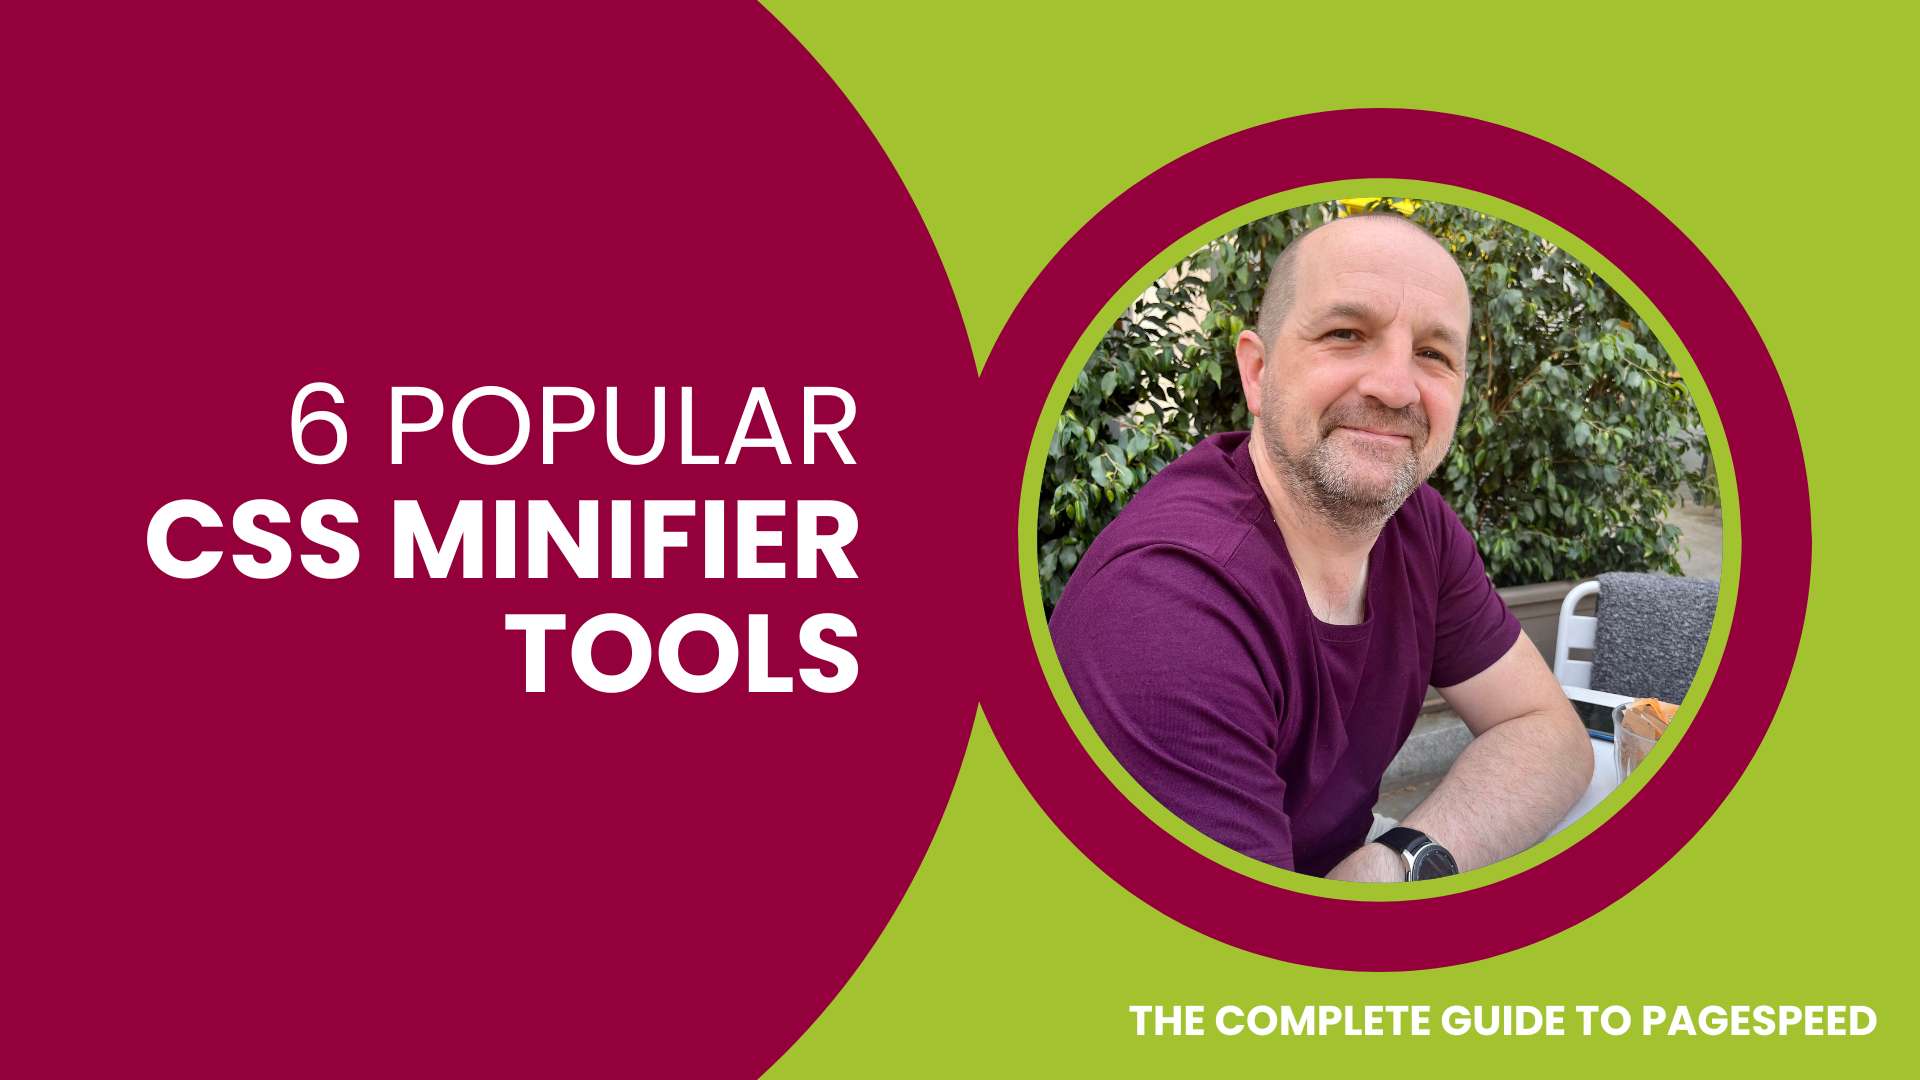 6 Popular CSS Minifier Tools